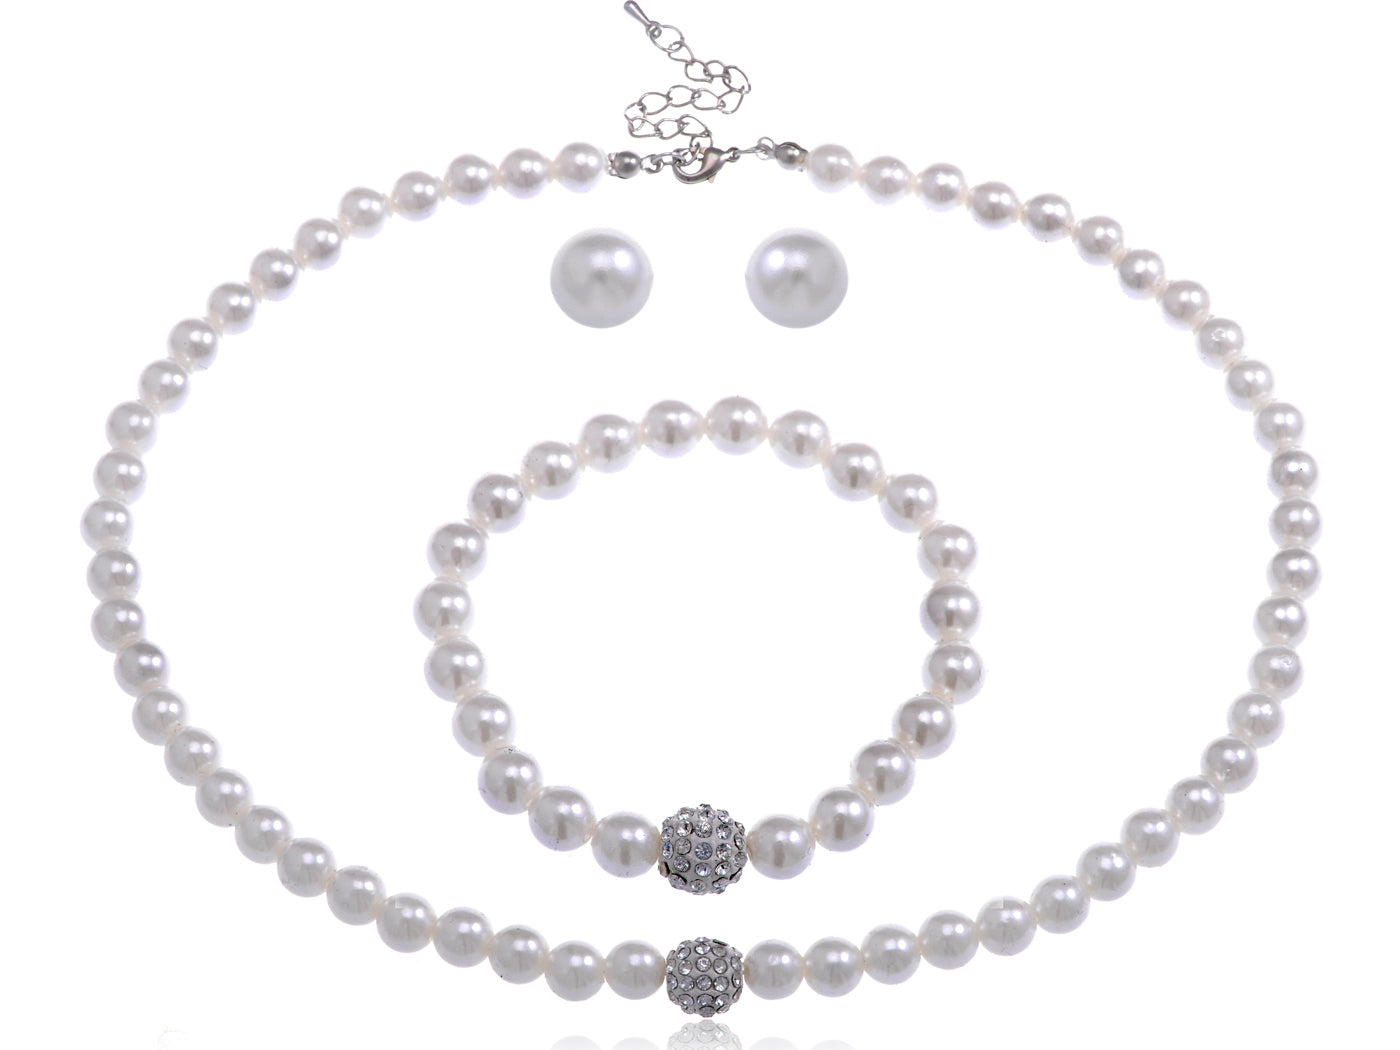 White Pearls Necklace Earrings Bracelet Set